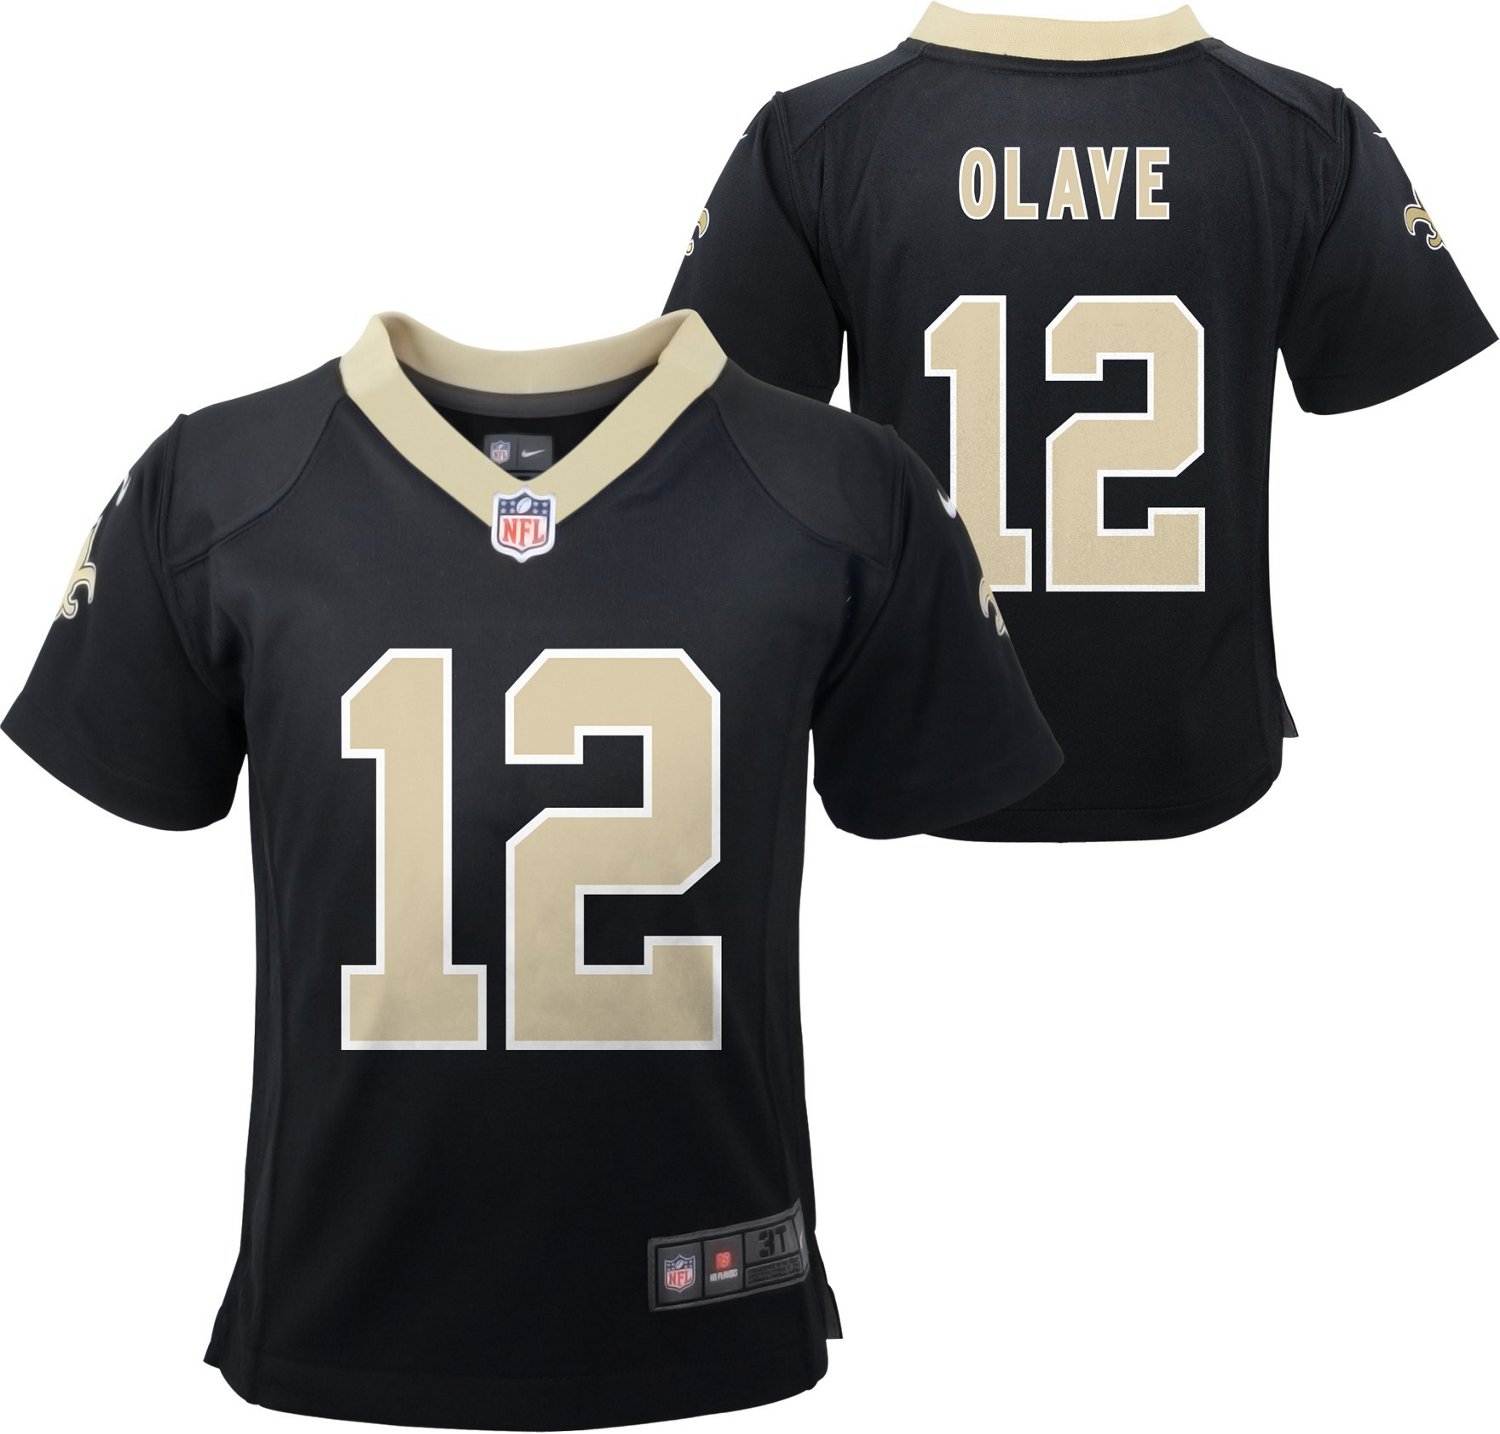 Chris Olave New Orleans Saints Jerseys, Chris Olave Shirts, Apparel, Gear